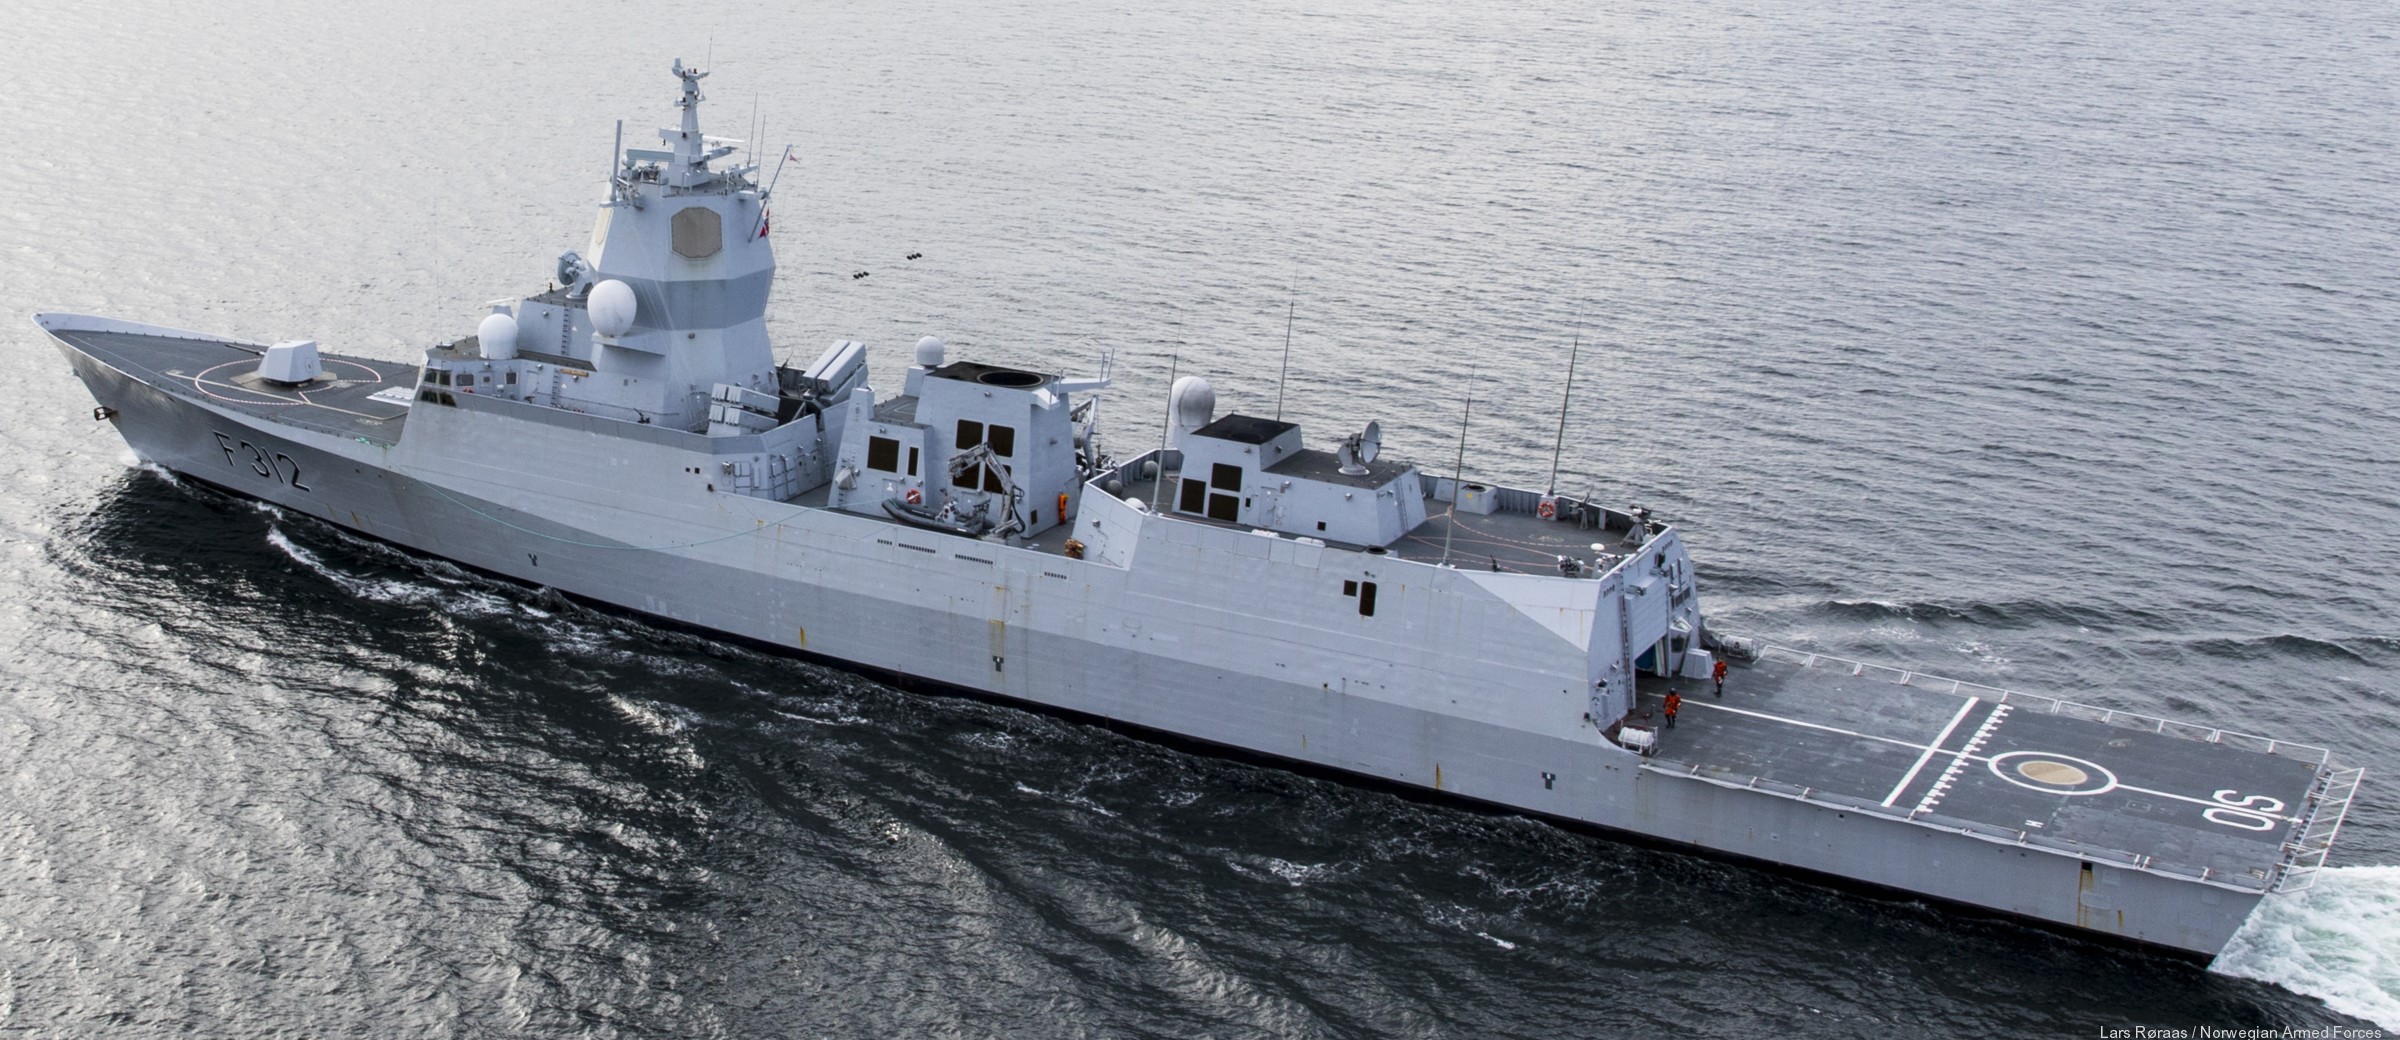 f-312 otto sverdrup hnoms knm fridtjof nansen class frigate royal norwegian navy 17 aegis combat system